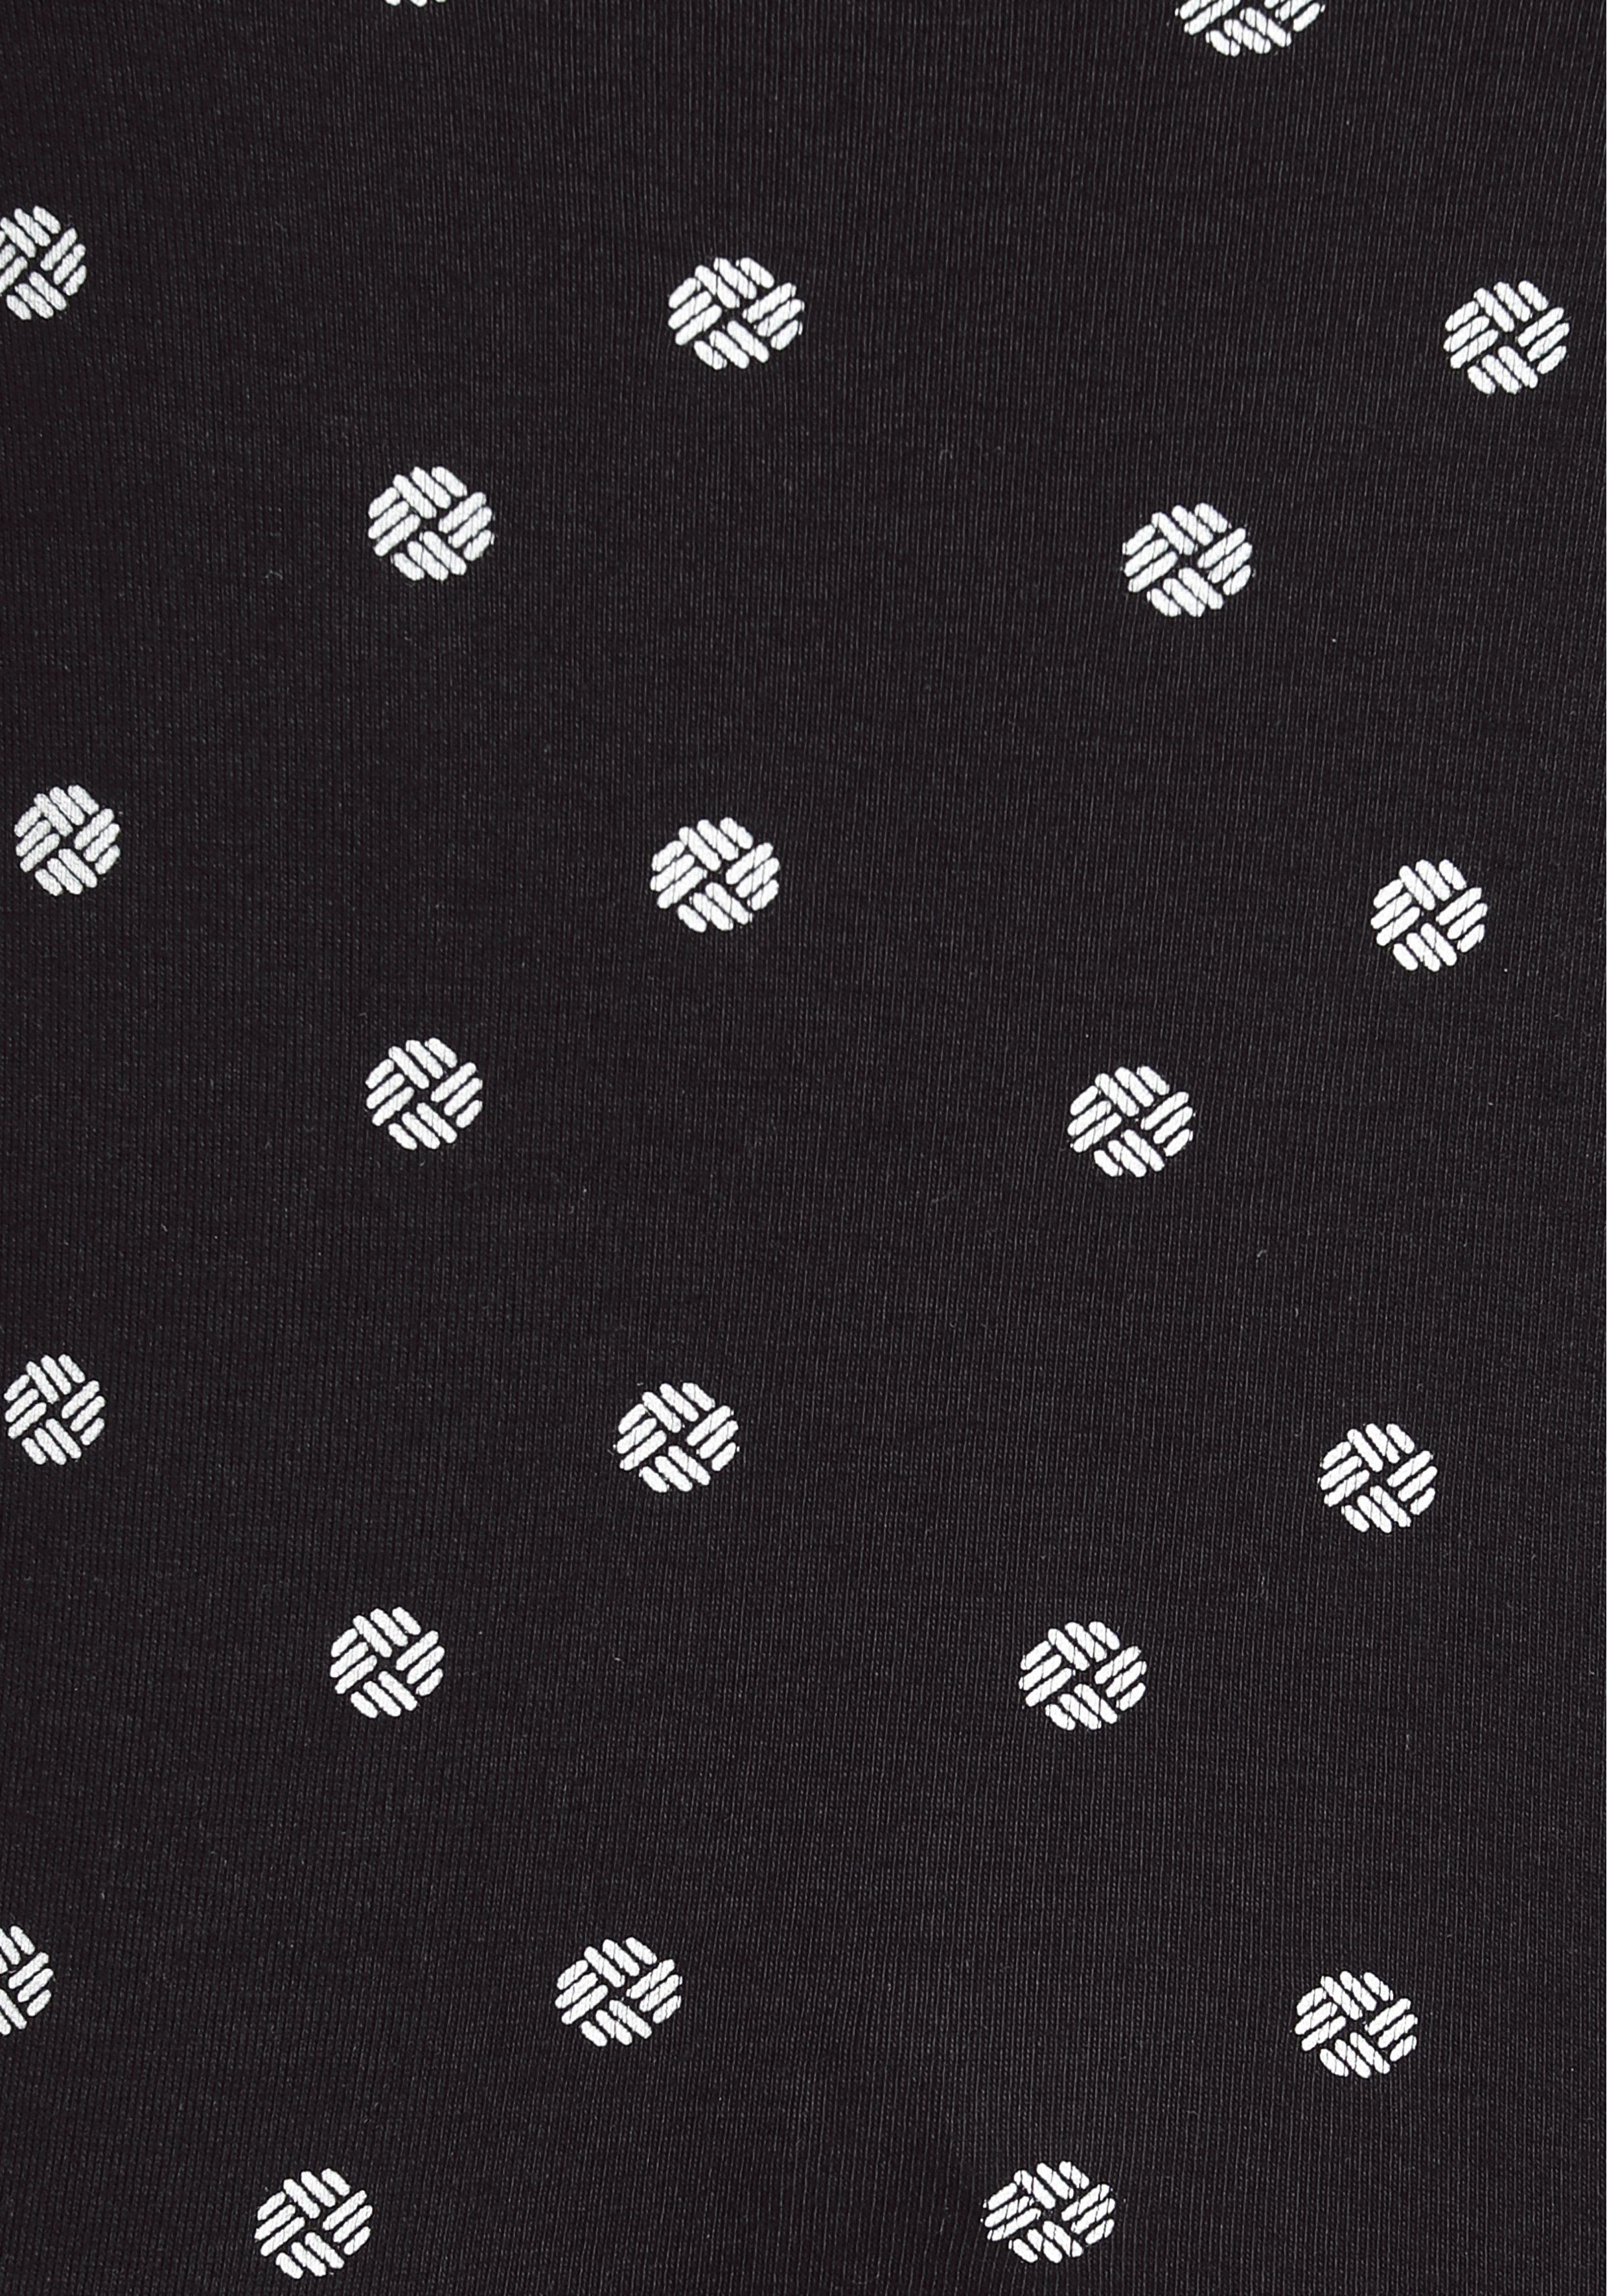 Flashlights Langarmshirt grau-meliert-schwarz-bedruckt, mit 2er-Pack) verschiedenen Printmotiven (Packung, grau